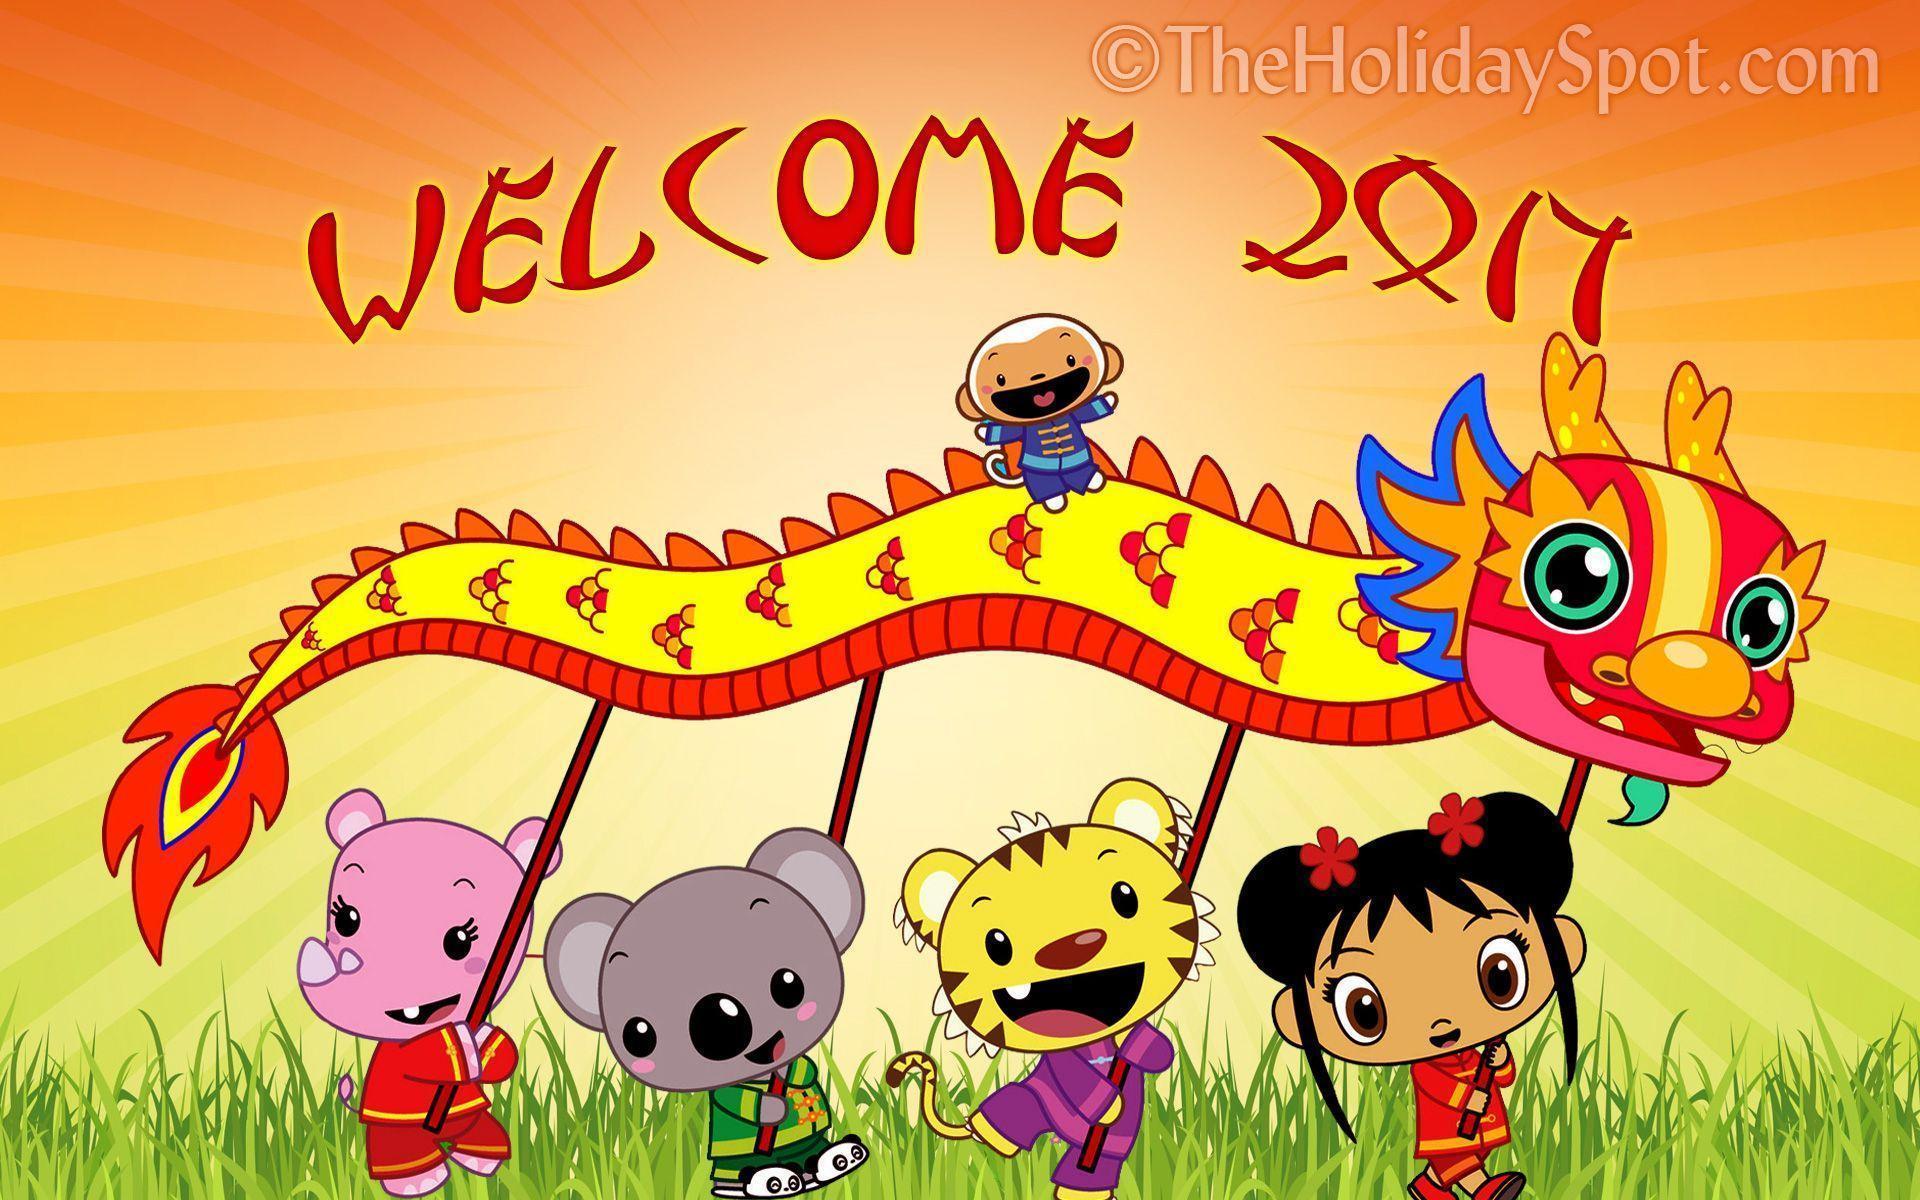 Chinese New Year wallpaper